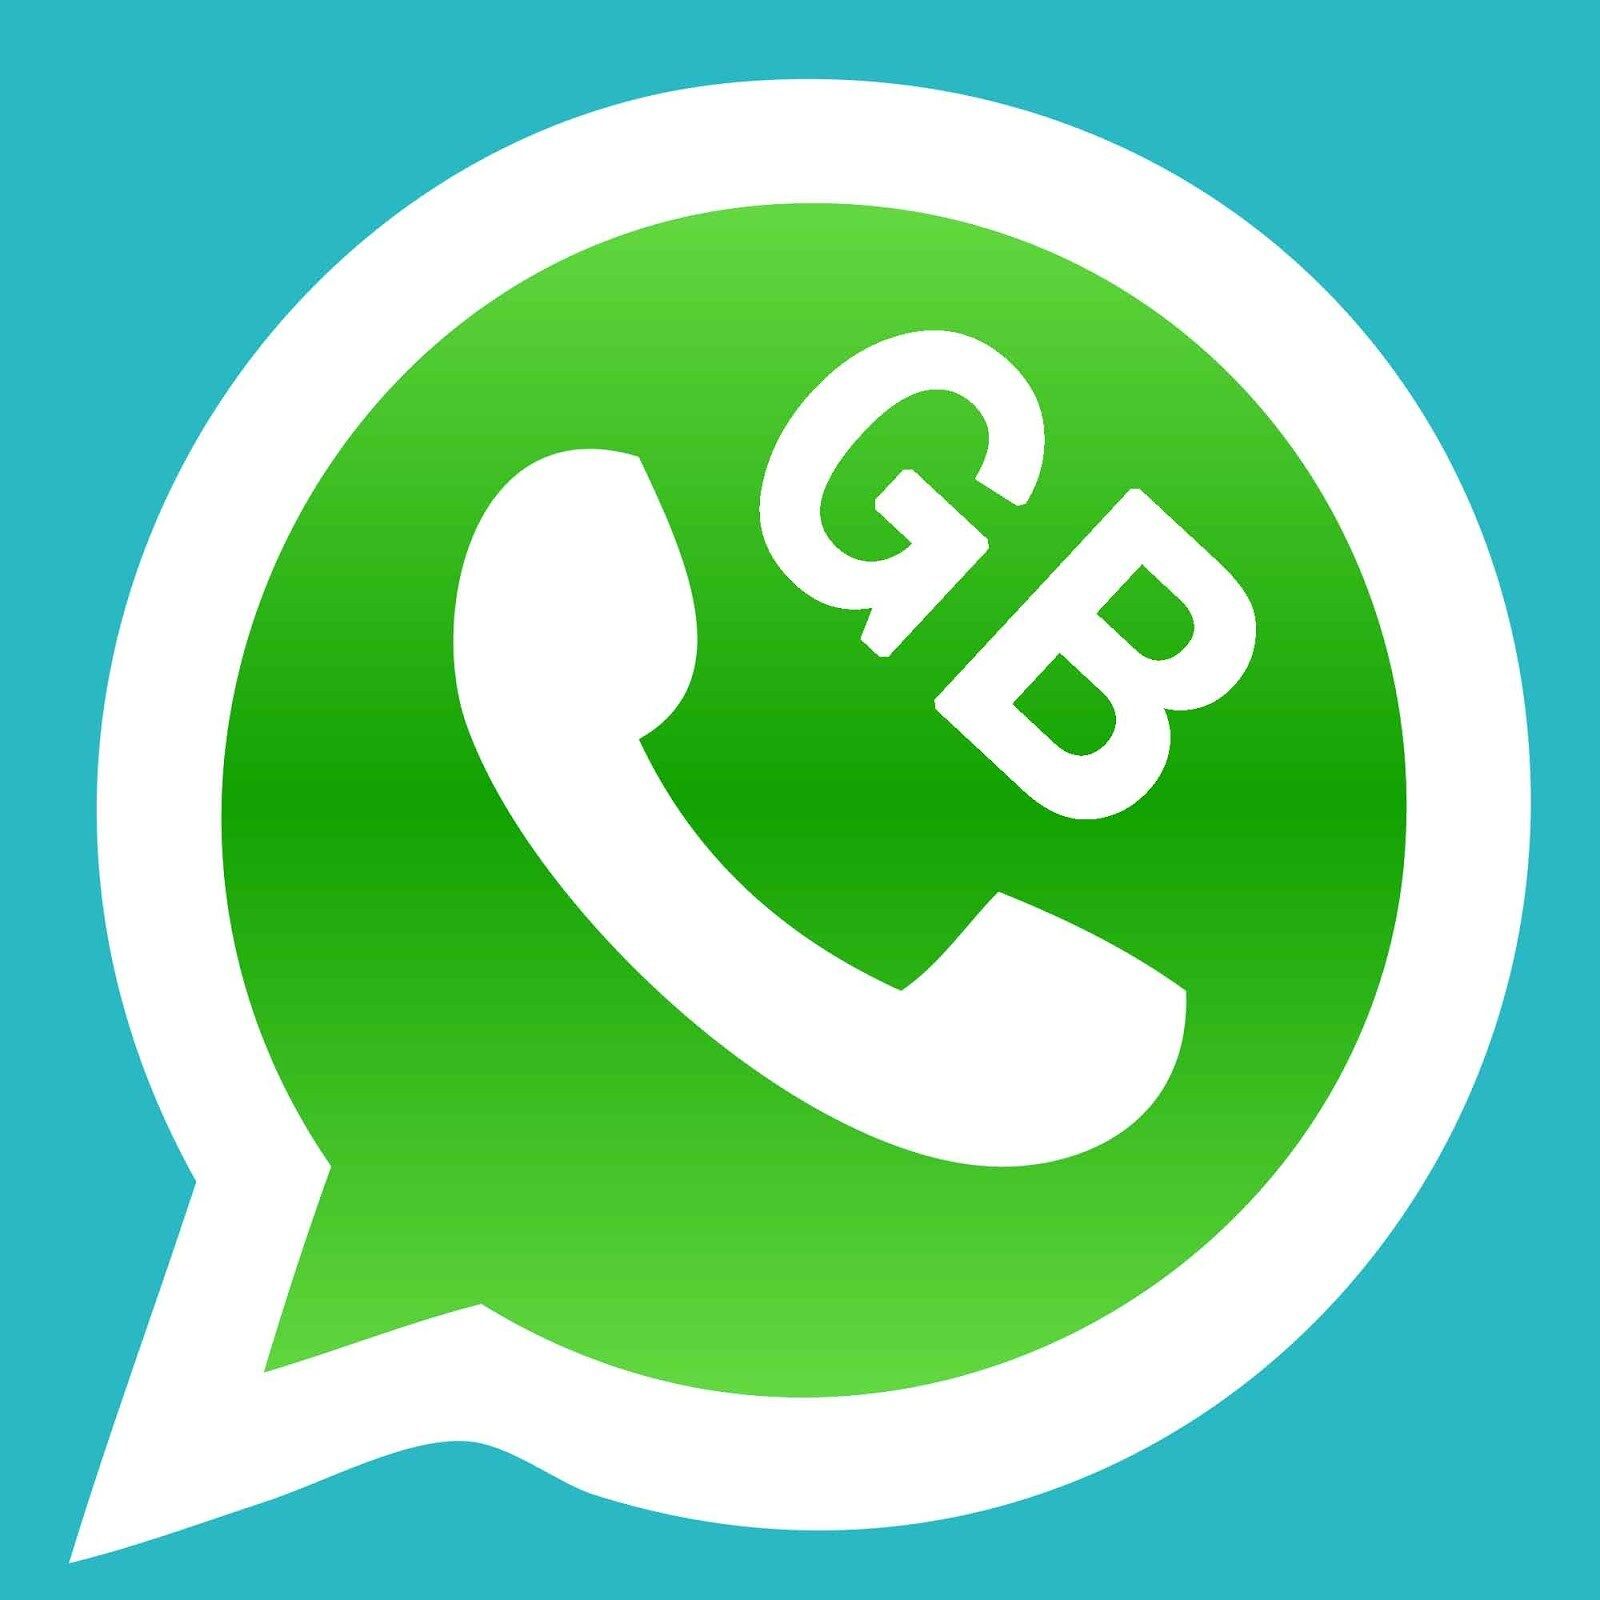 gb whatsapp app download apk